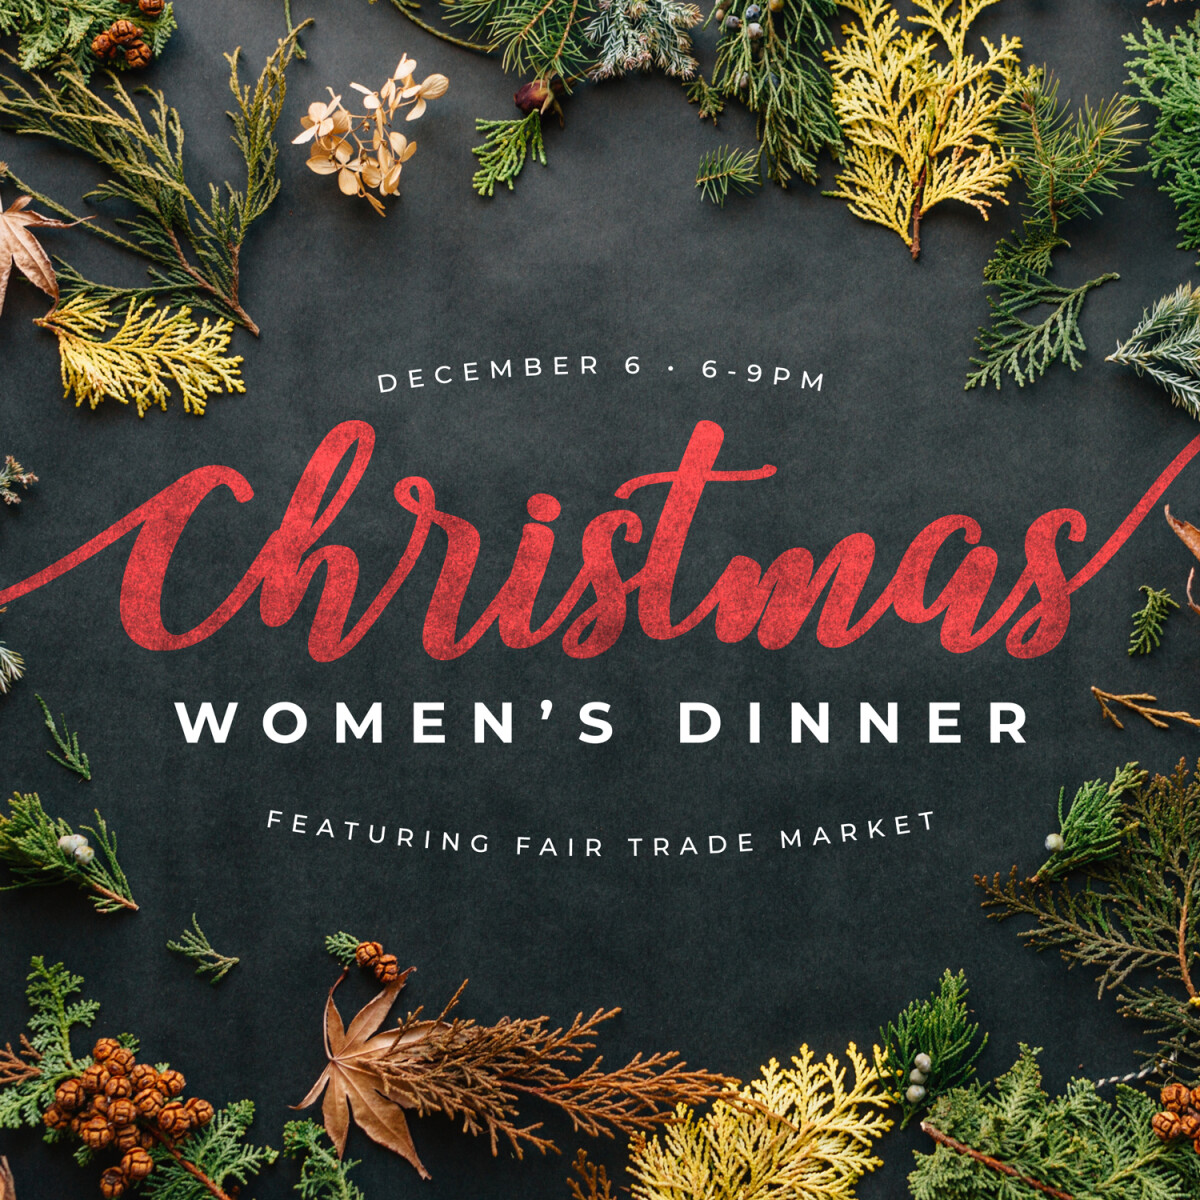 Women's Christmas Dinner and Fair Trade Market